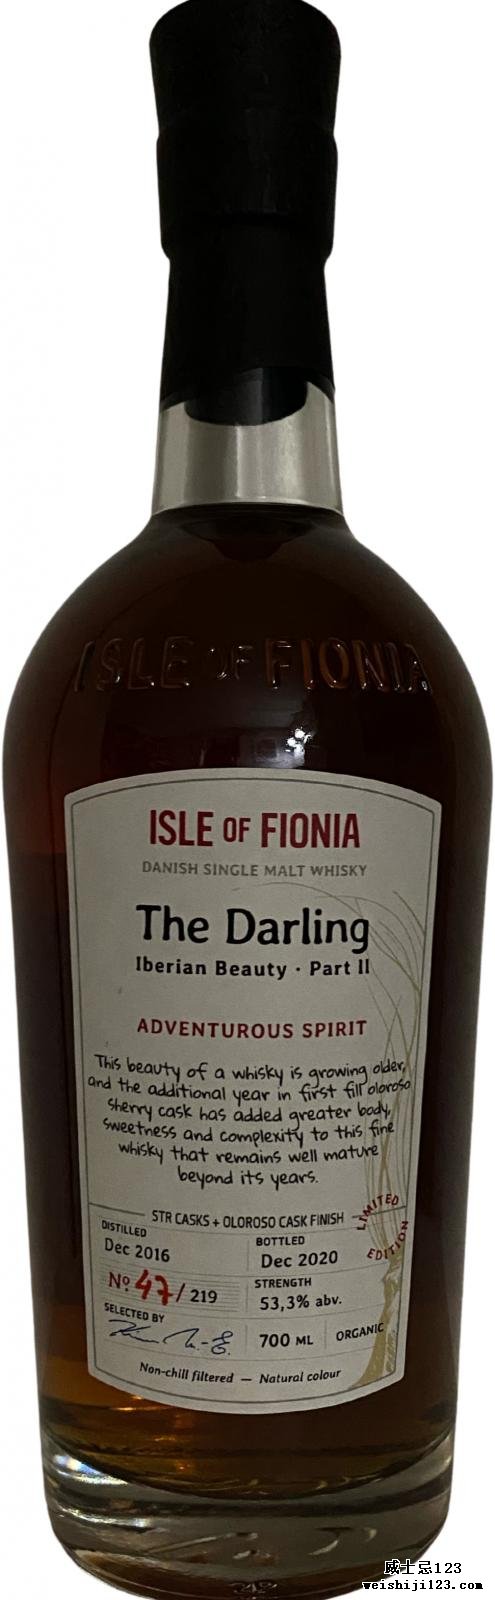 Isle of Fionia 2016 - The Darling